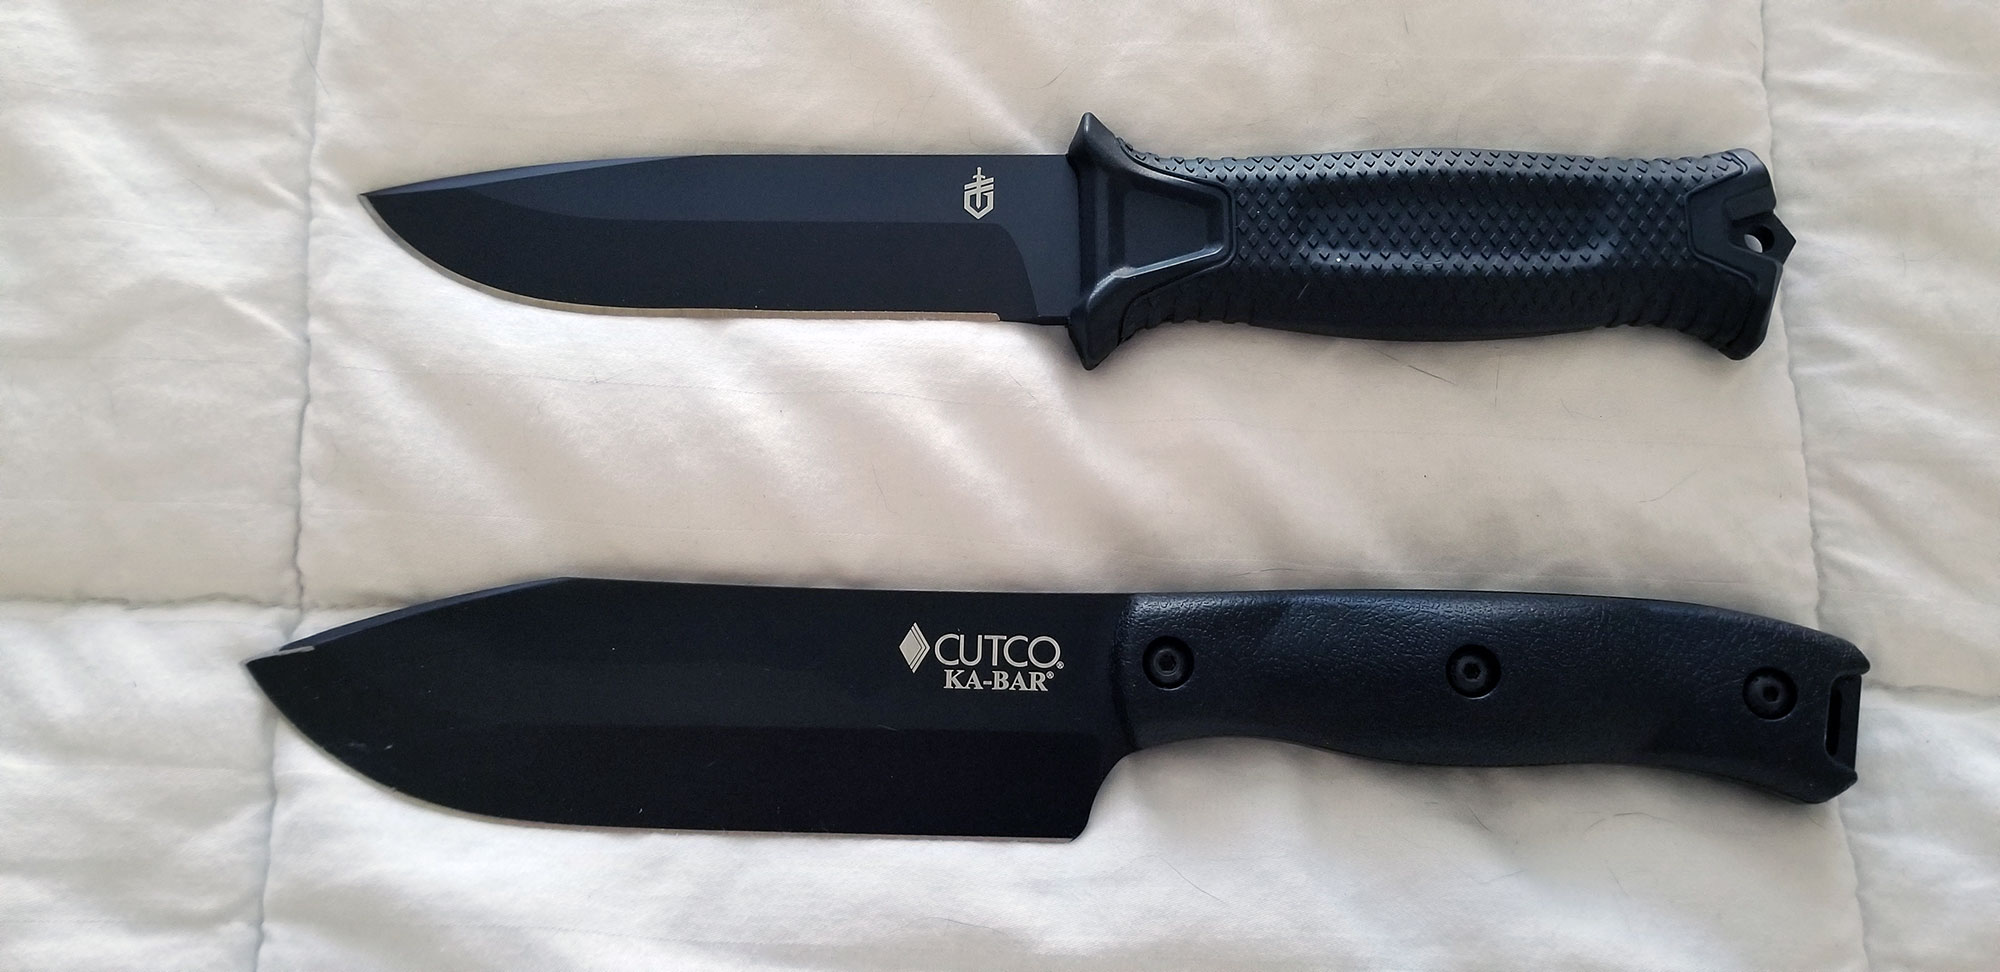 Cutco, Kitchen, Cutco Hunting Knife